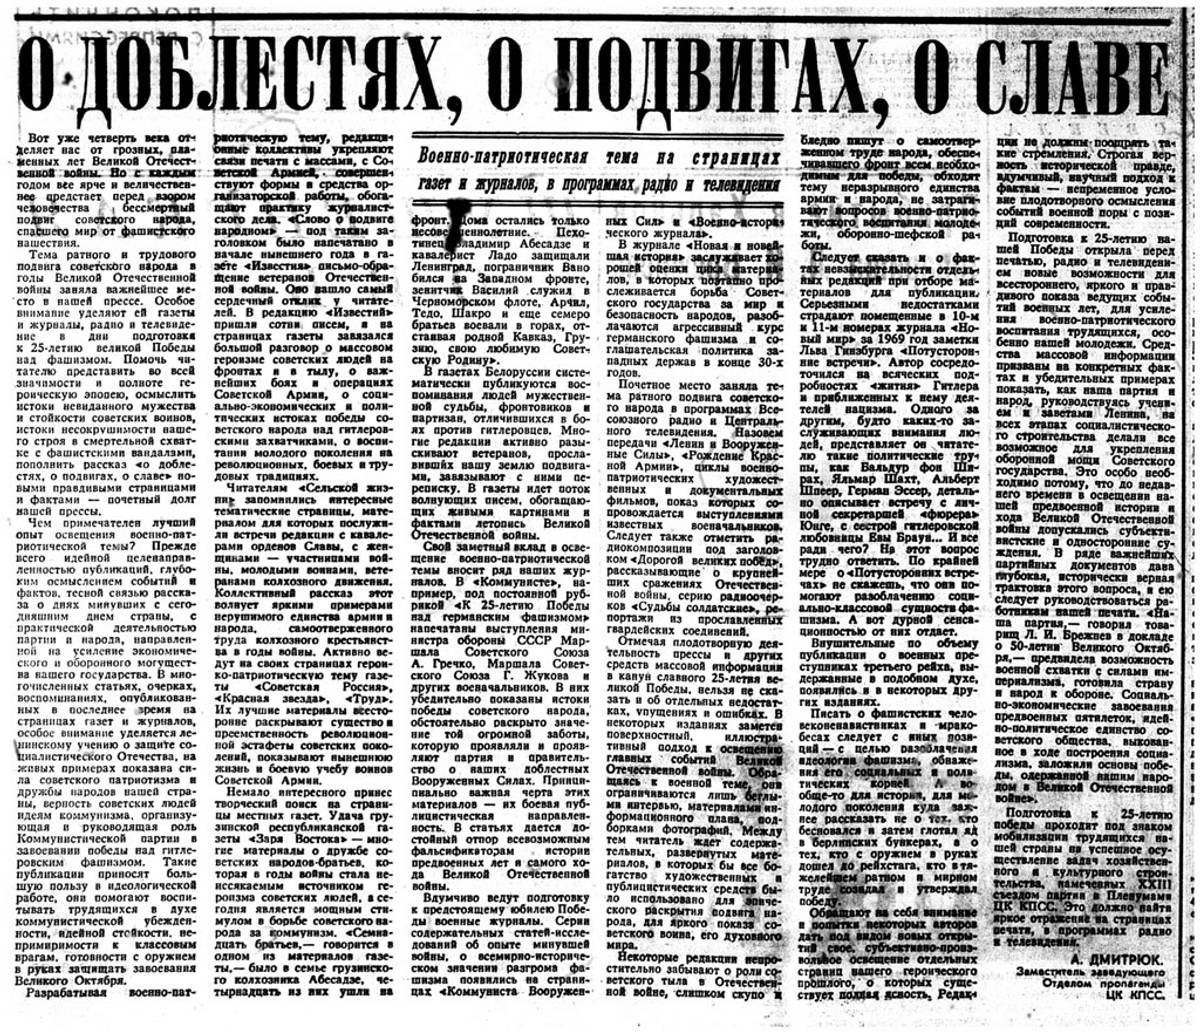 ‘Pravda’ article, 13 April 1970, attacking Lev Ginzburg’s ‘Otherworldly Encounters’